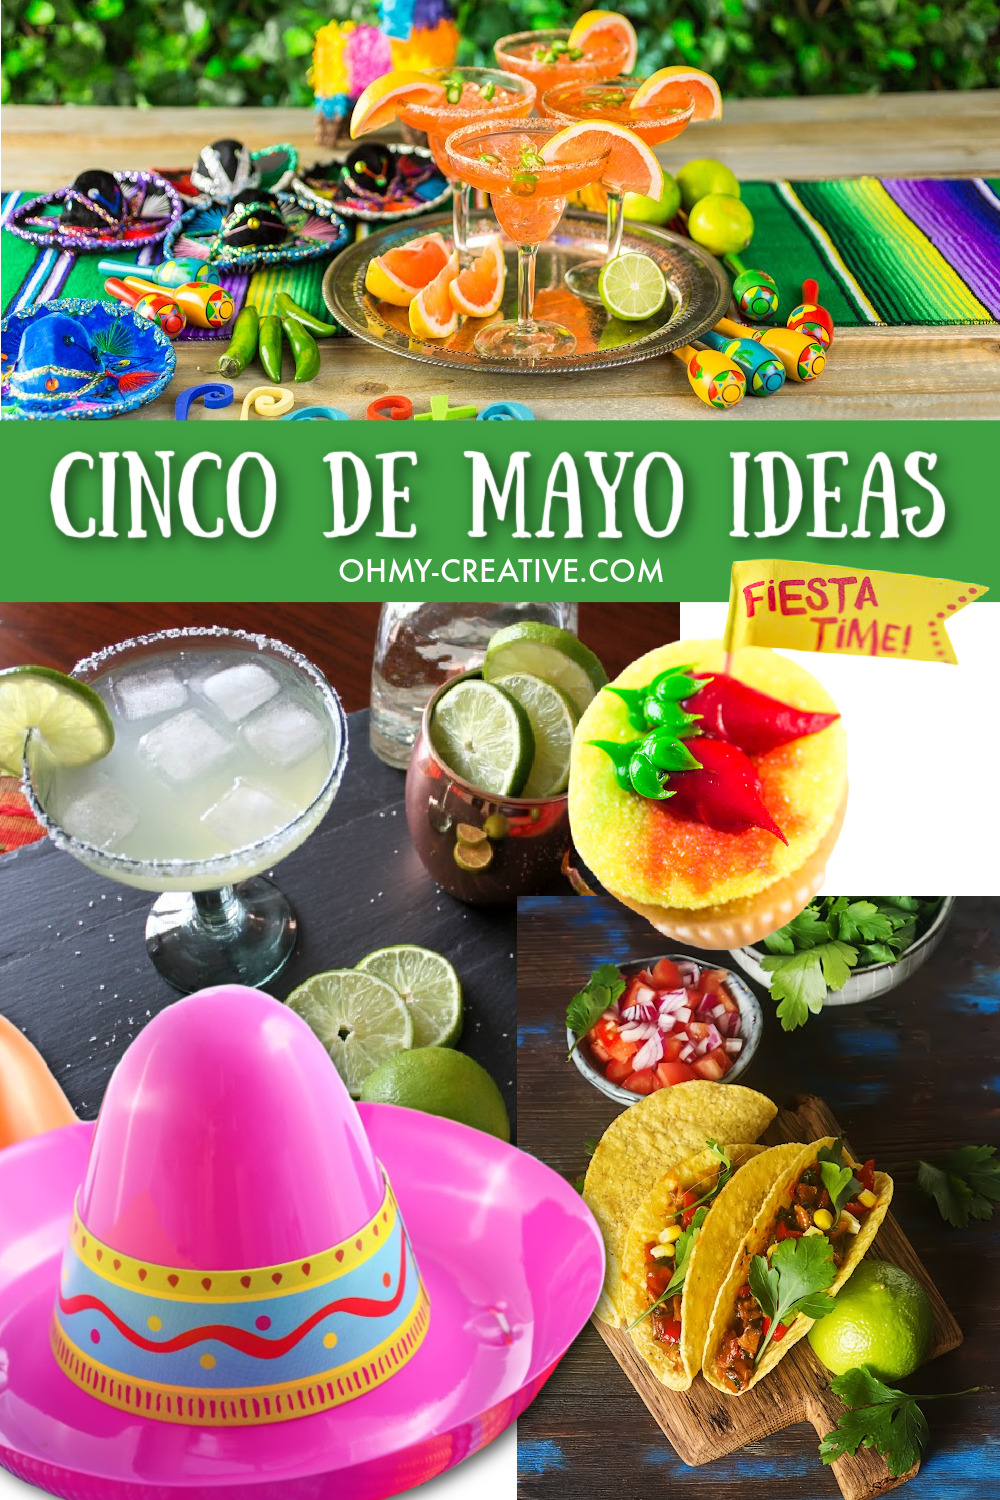 A collage of Cinco de Mayo Ideas including Mexican decorations, sombreros, margaritas, tacos and a cupcake